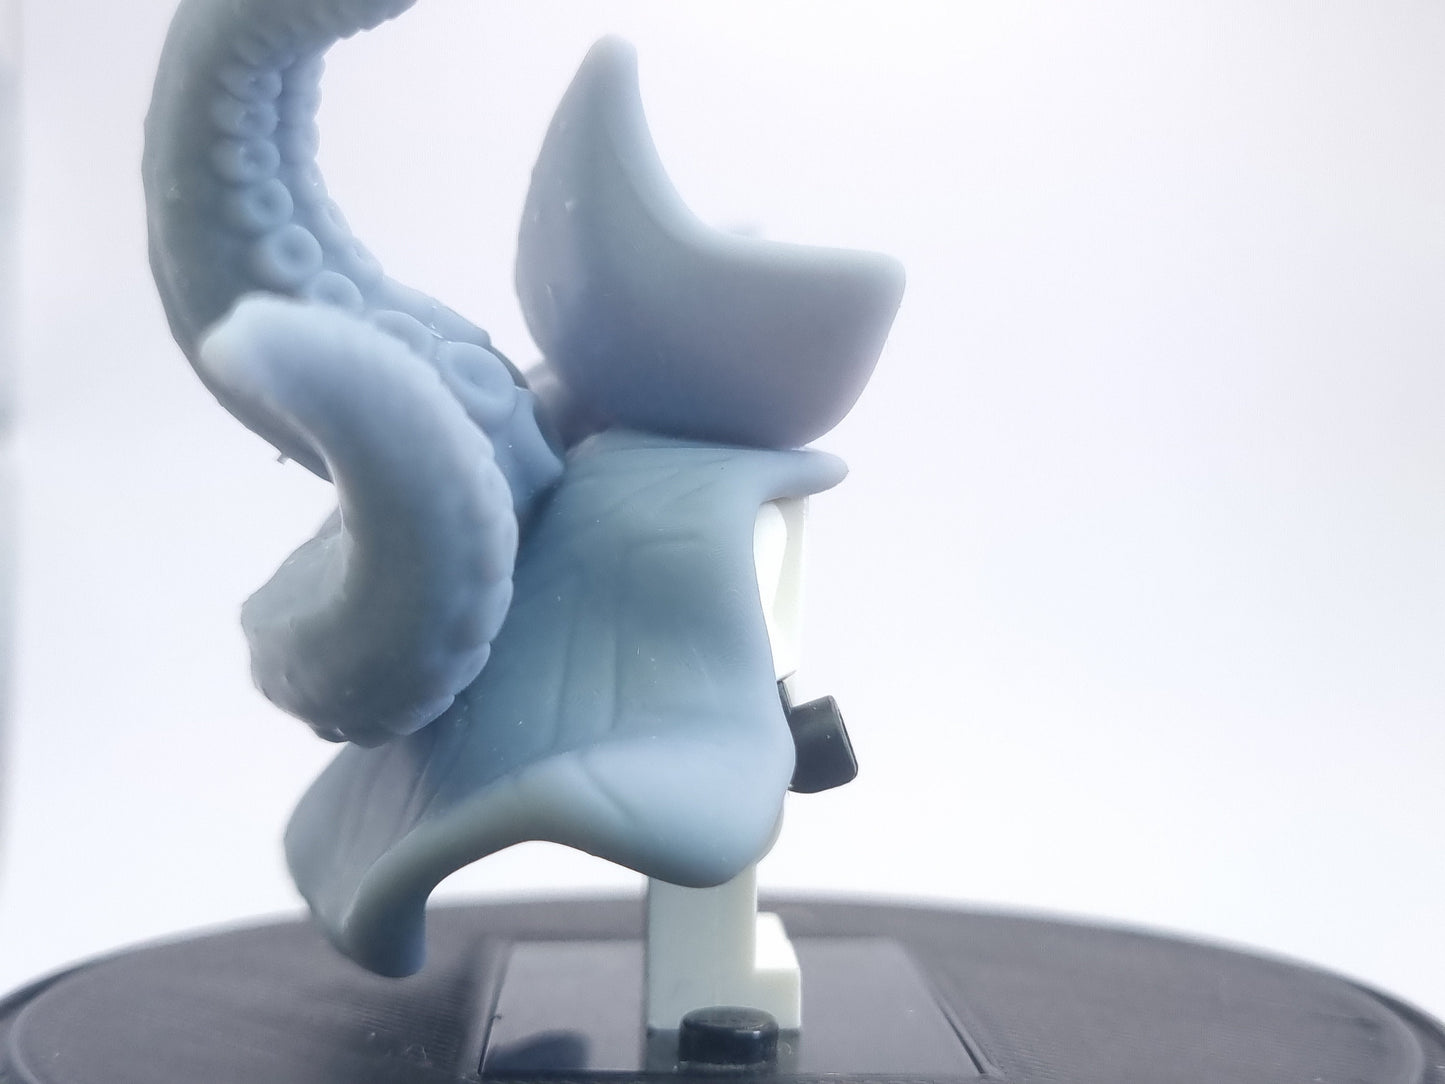 Building toy custom 3D printed magical tentacle coat!